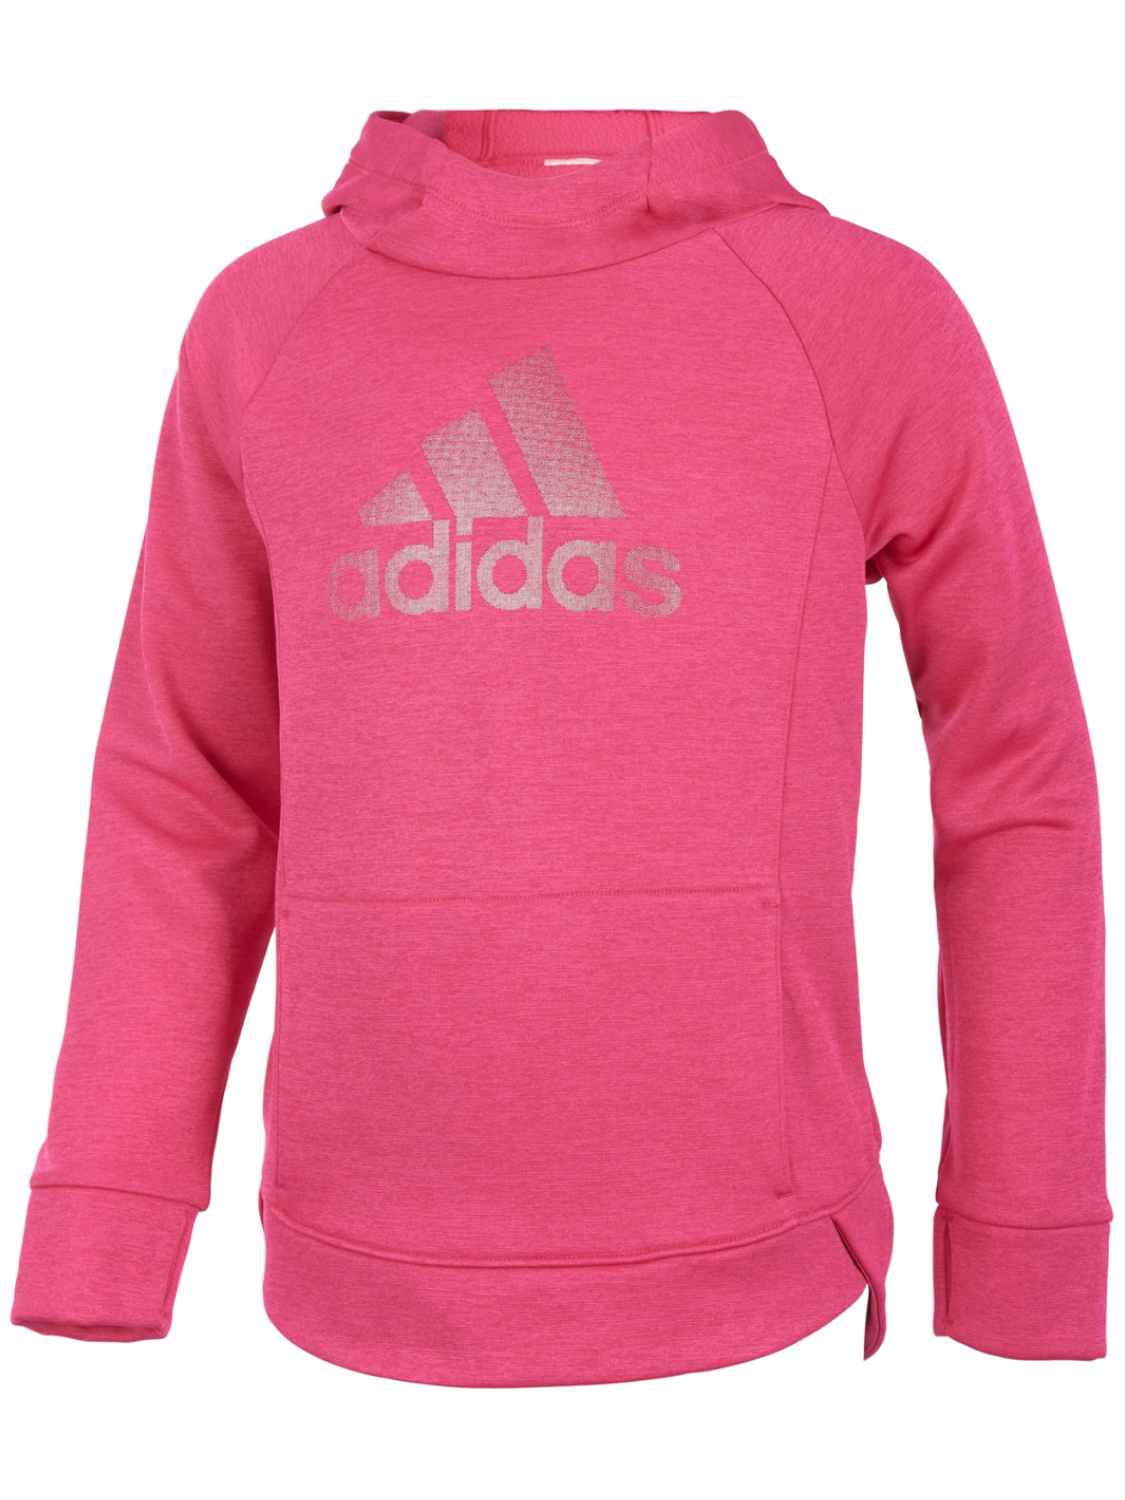 Adidas Girls Hot Pink Magenta Shimmer Hoodie Sweatshirt Jacket ...